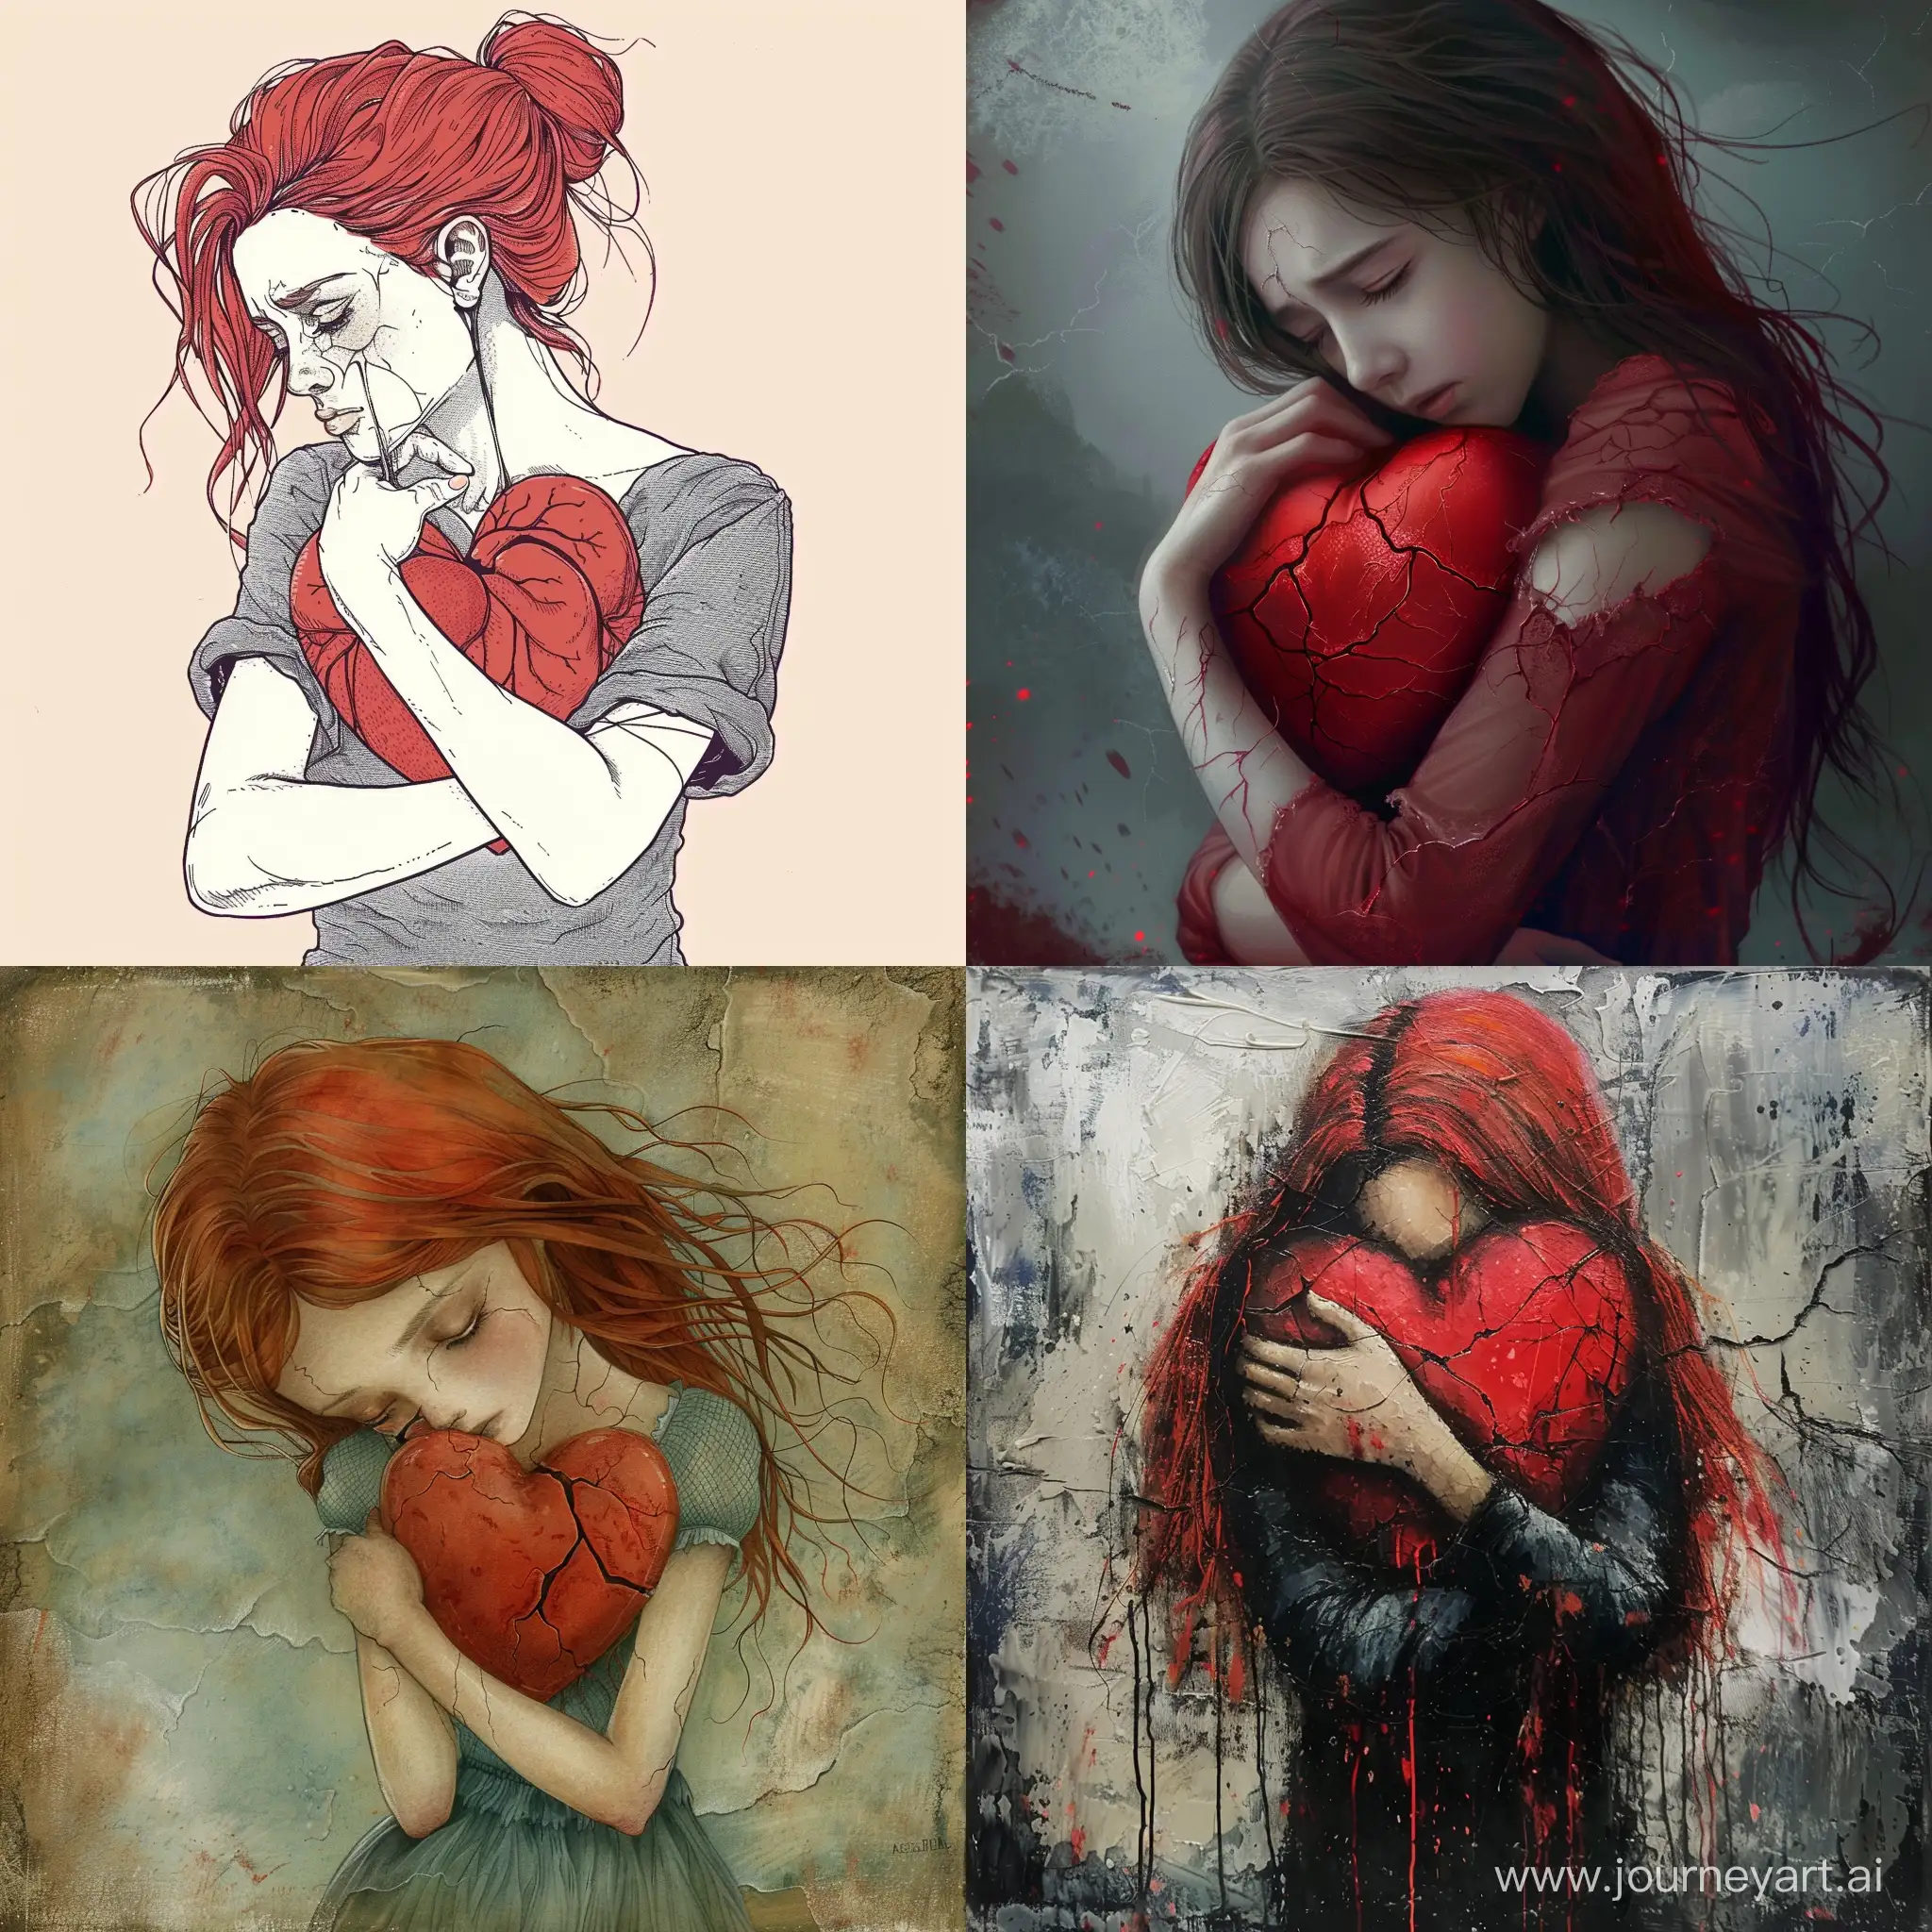 Girls-Embracing-Cracked-Heart-Emotional-Artistic-Depiction